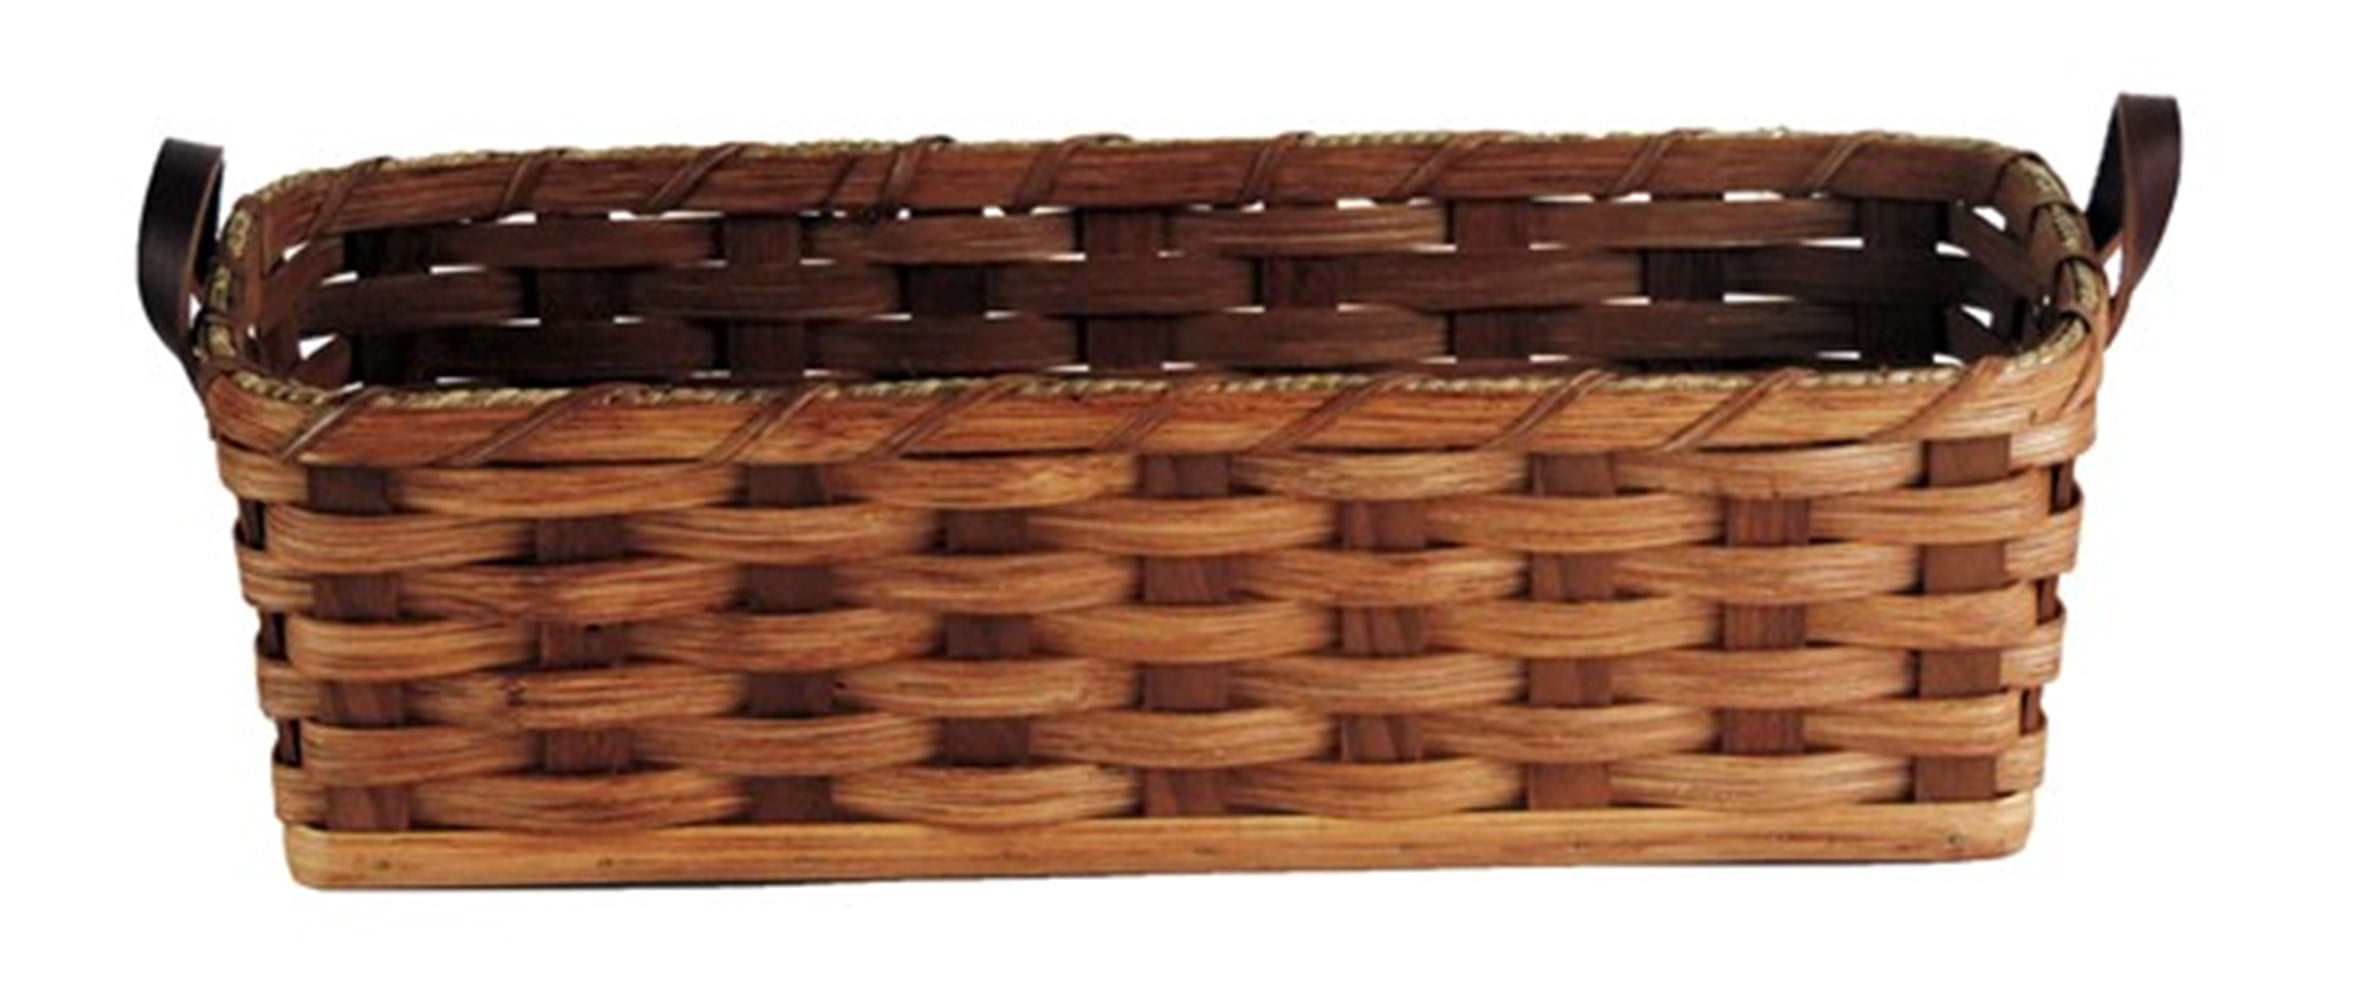 2-Tier Basket Storage | Large Amish Wicker Decorative Organizer